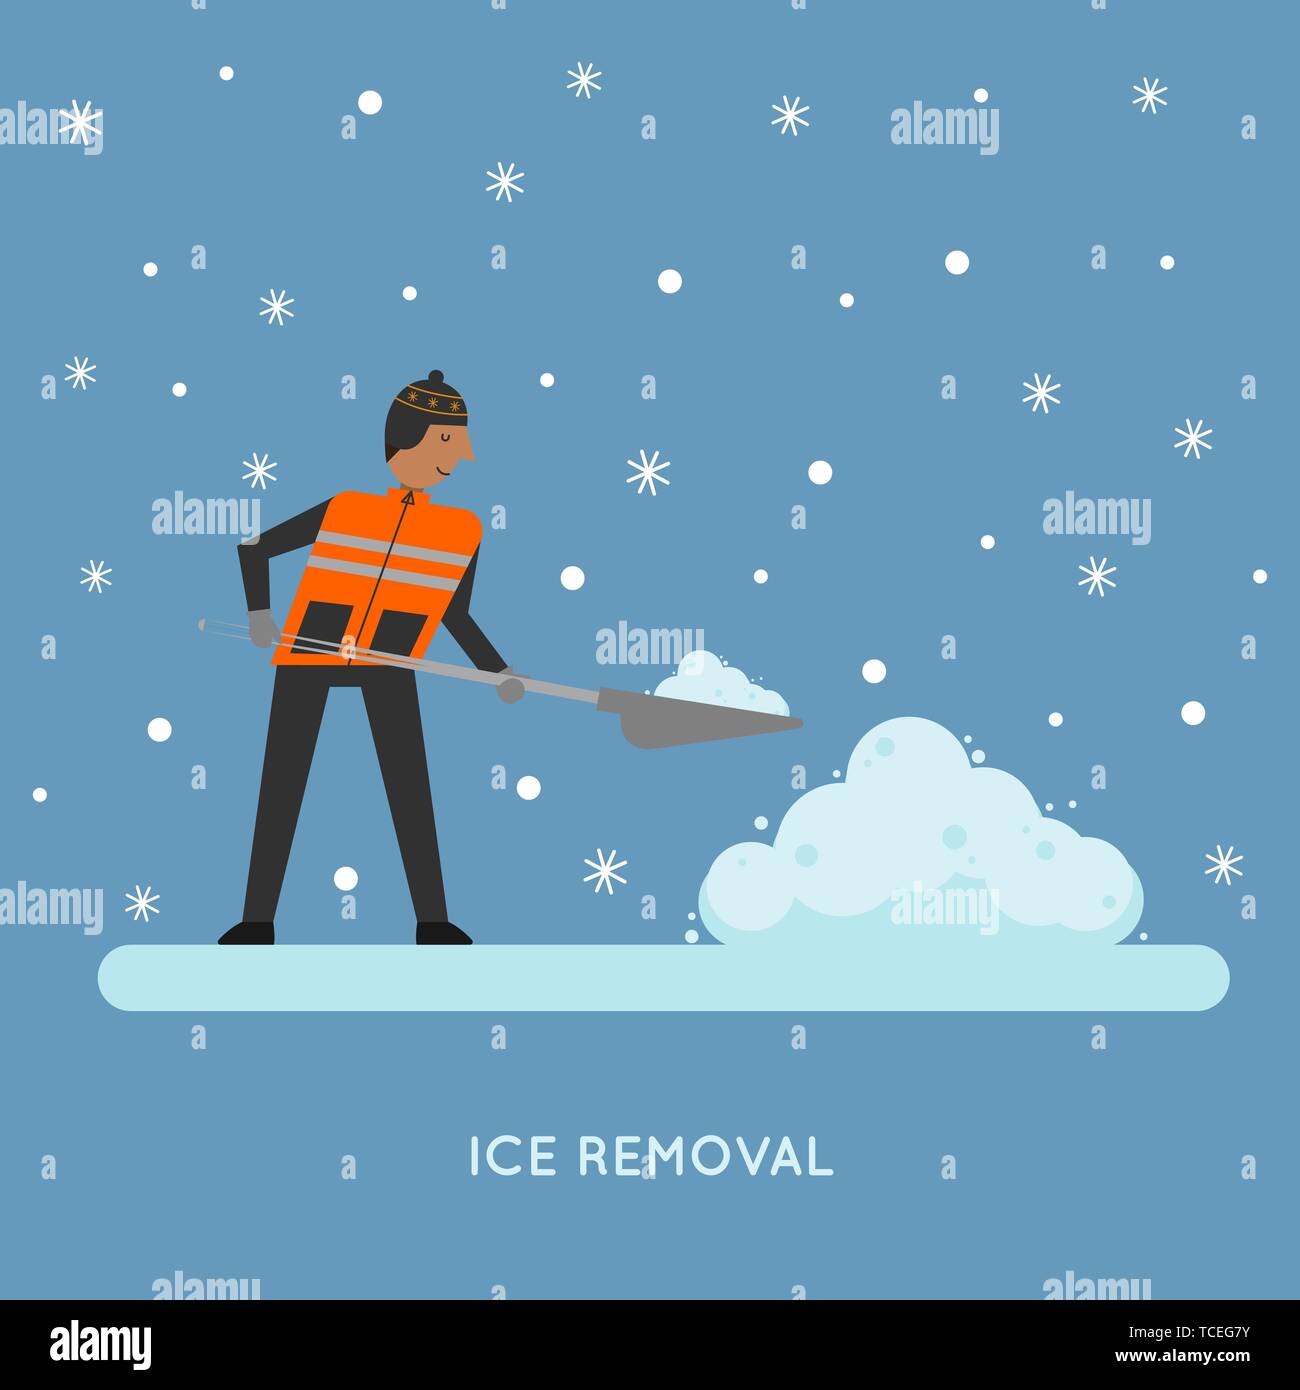 shoveling snow cartoon